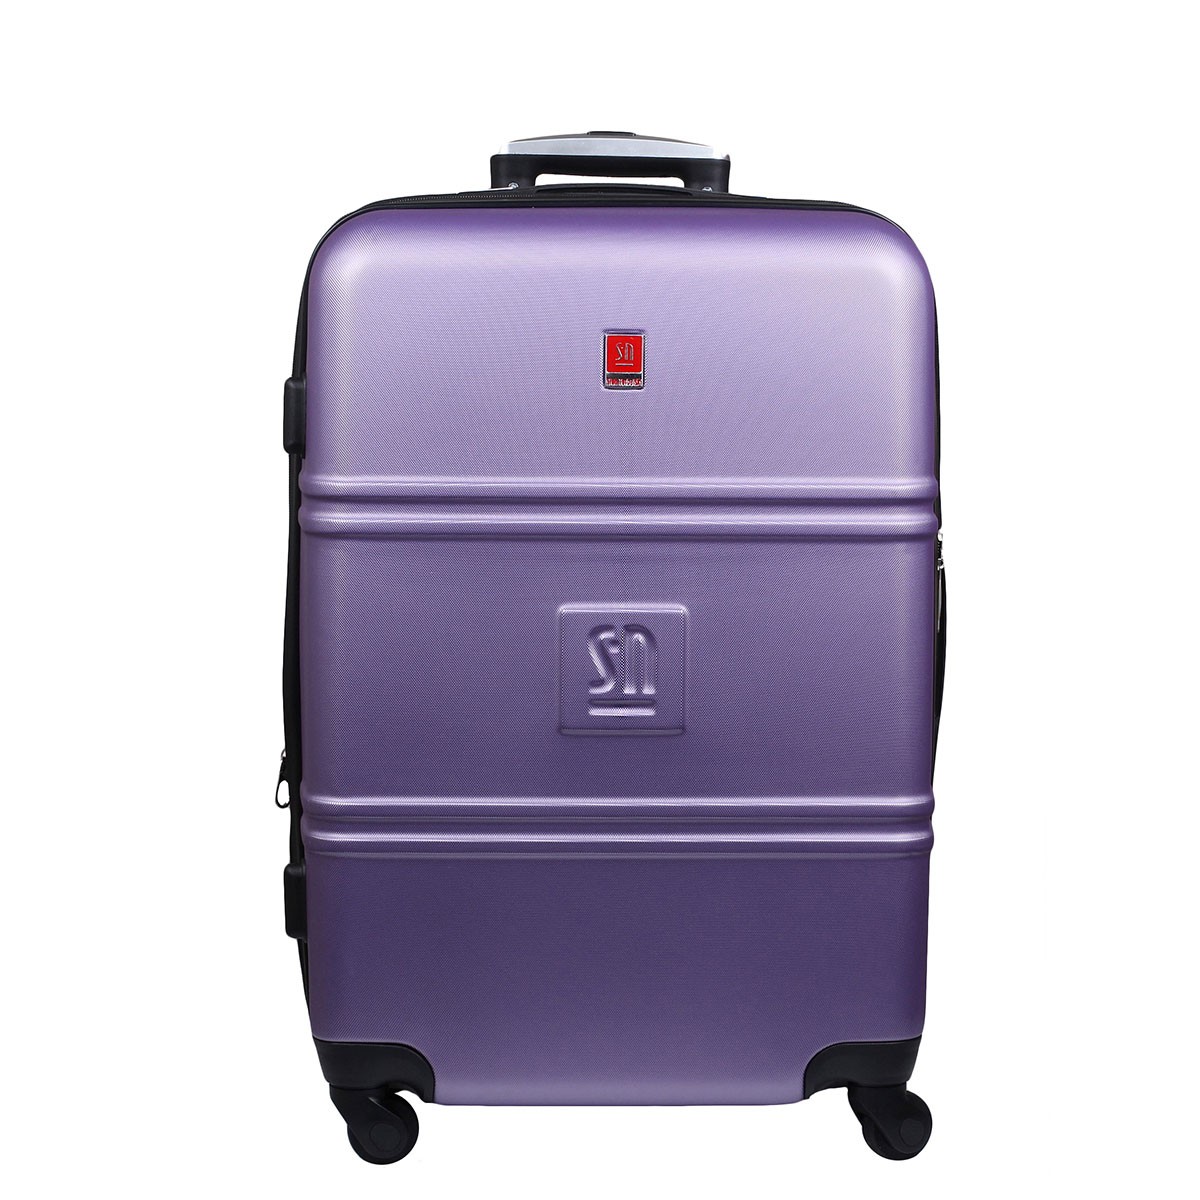 fioletowa-walizka-srednia-ABS-04-0411O-10.jpg